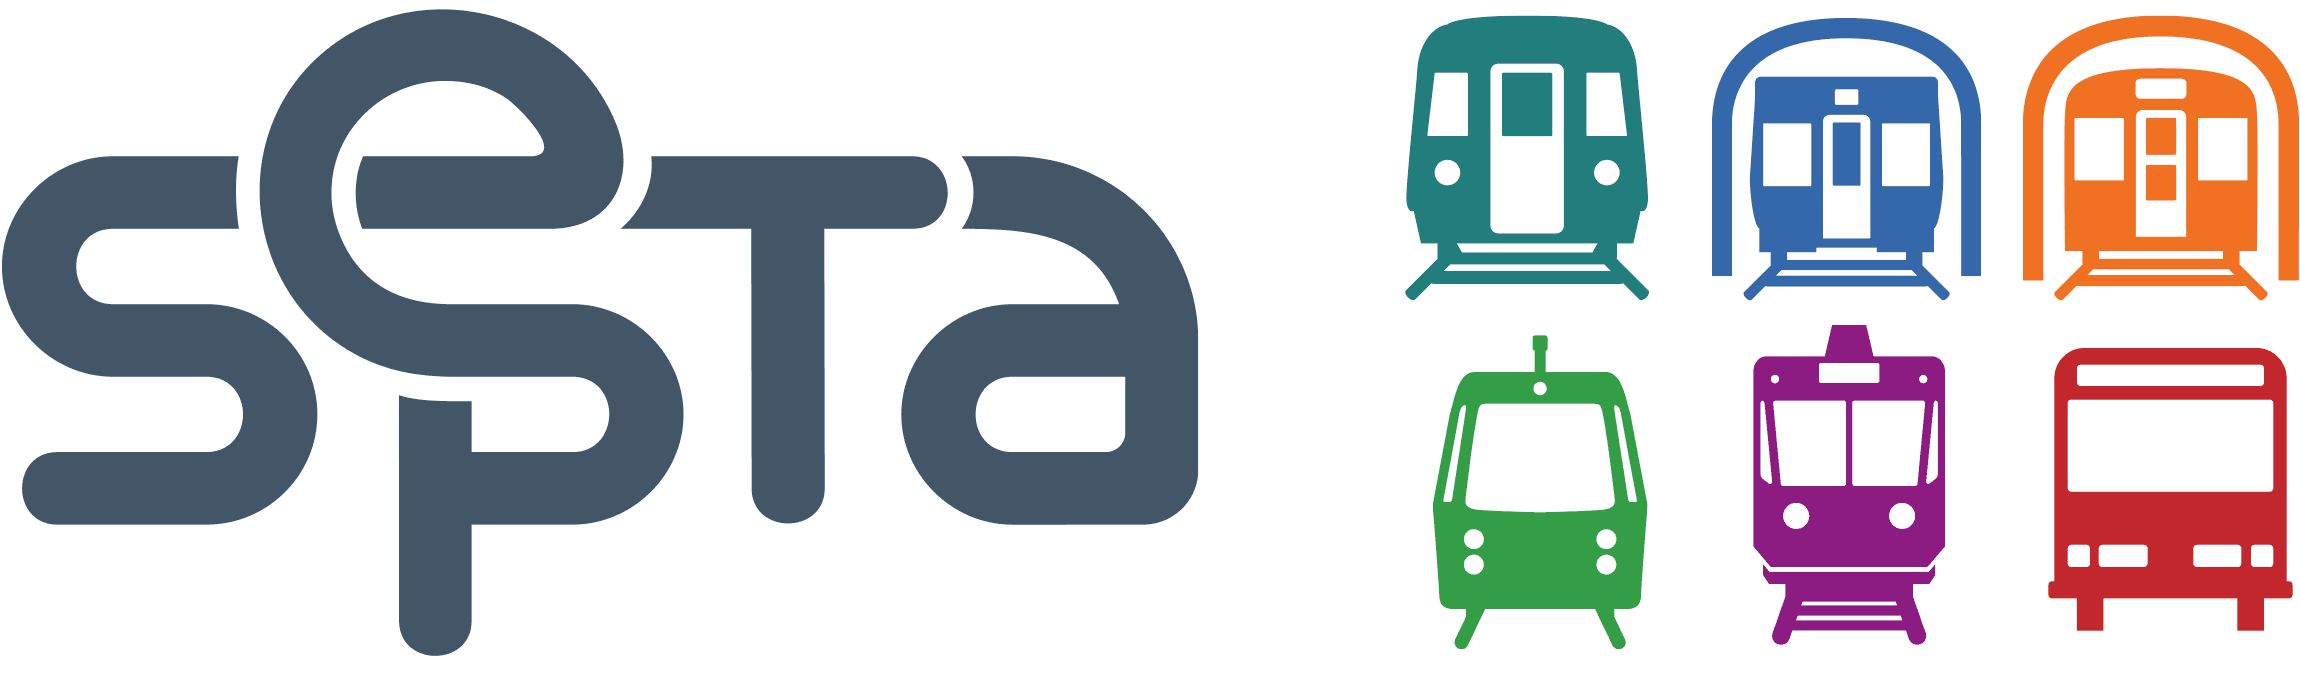 SEPTA Logo - Unified branding and signage for Philadelphia's transit system